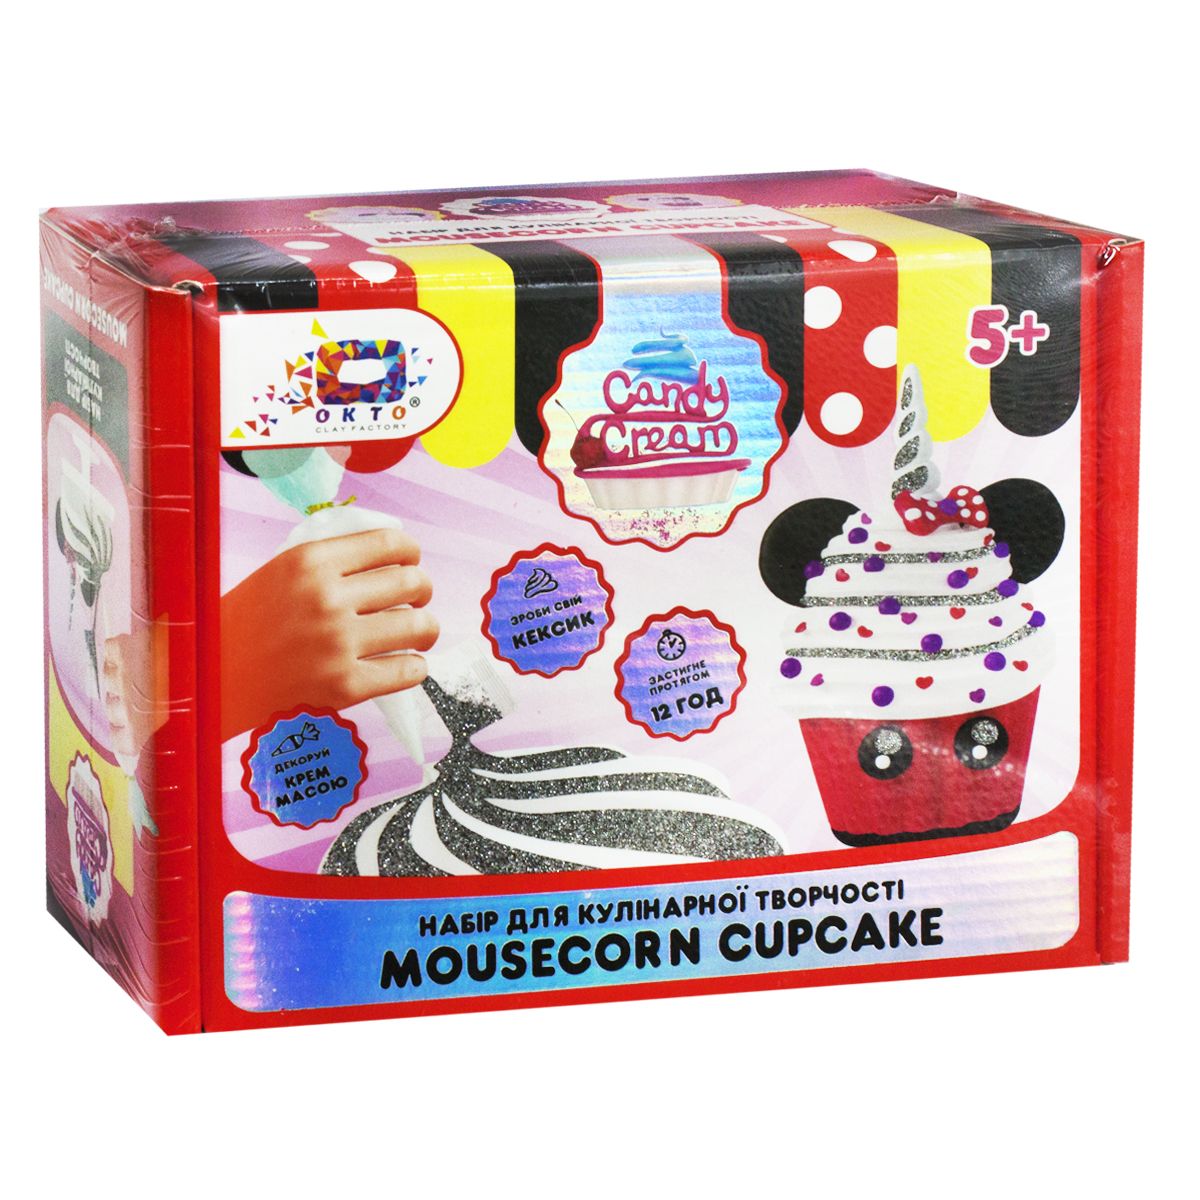 Набор для творчества "Candy cream.  Mousecorn Cupcake"